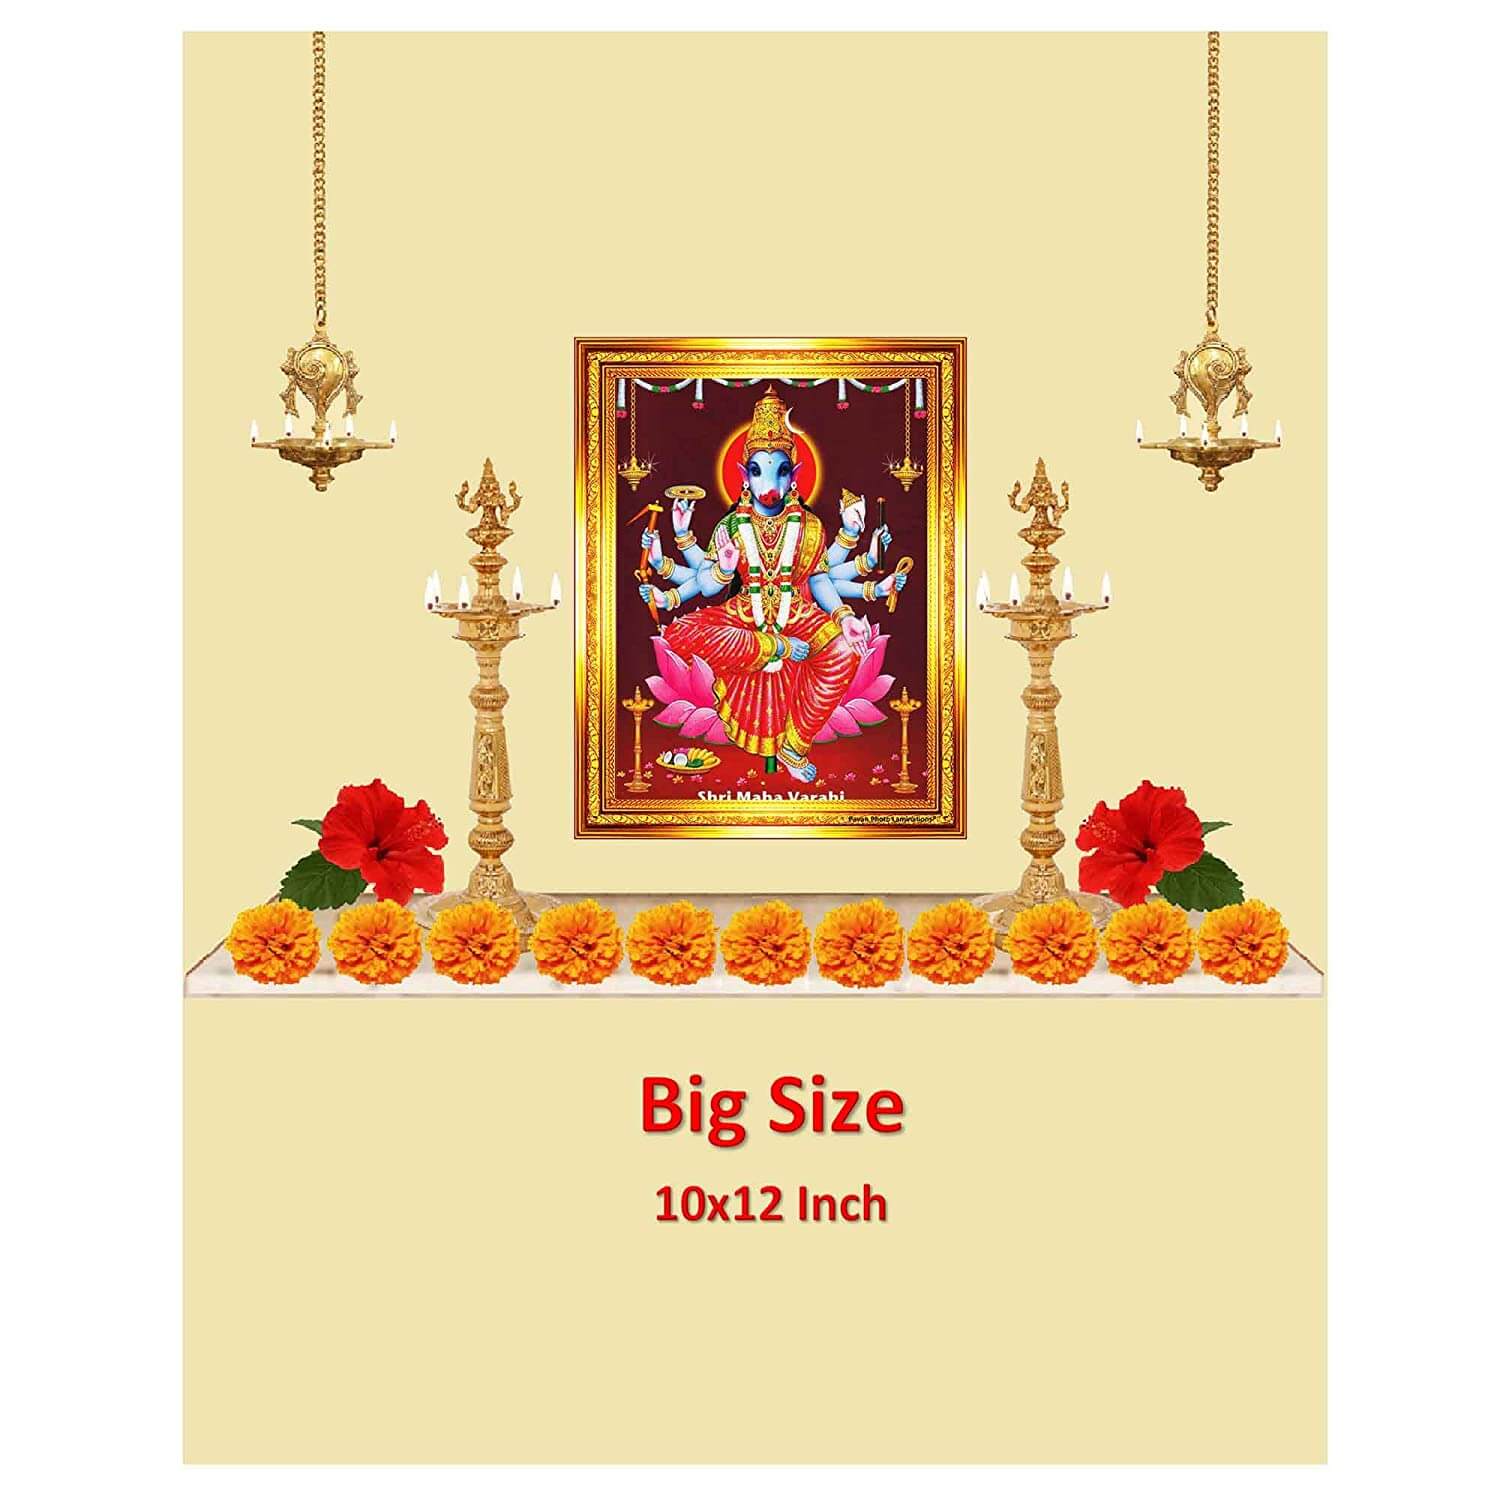 Goddess Sri Maha Varahi Devi Amman Mata Ammavari Photo Frame (Golden Color, Medium Size 26x32cm) Mangal Fashions | Indian Home Decor and Craft